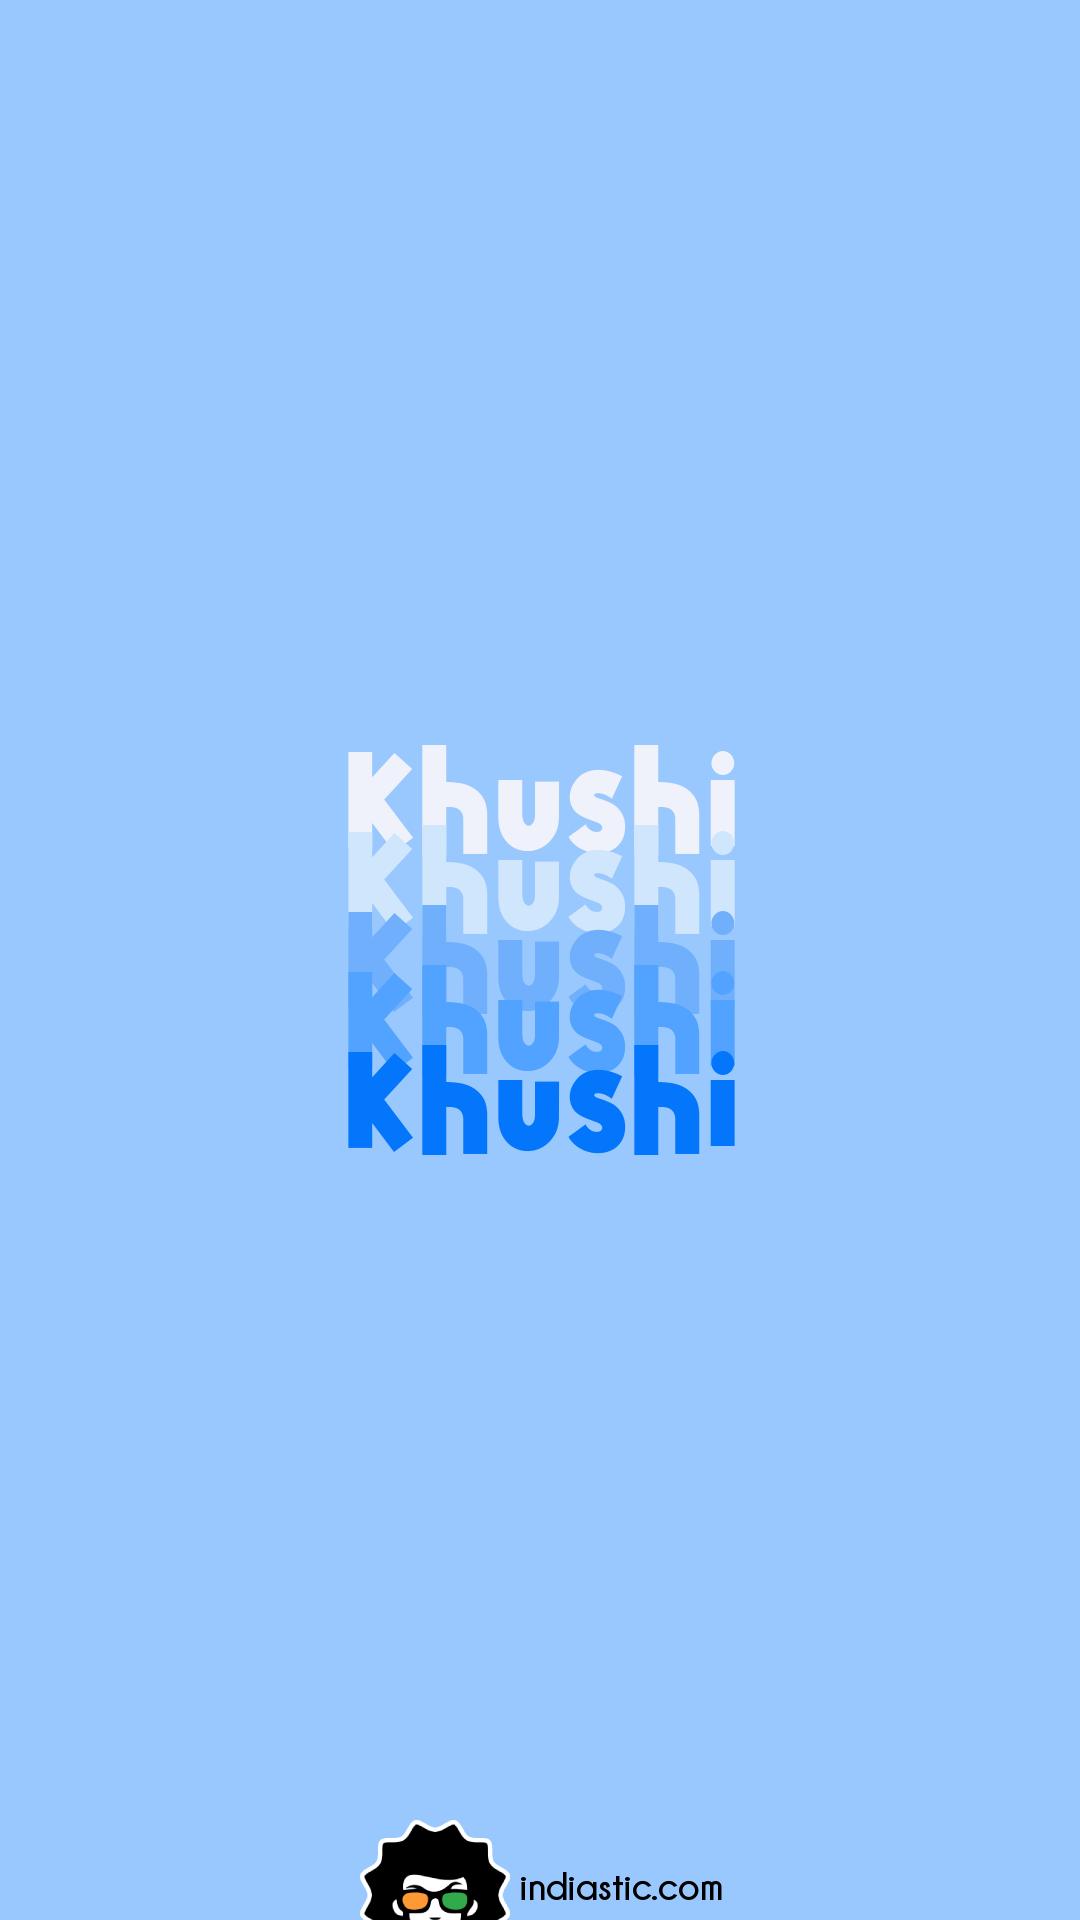 Jungle theme story image with Khushi name